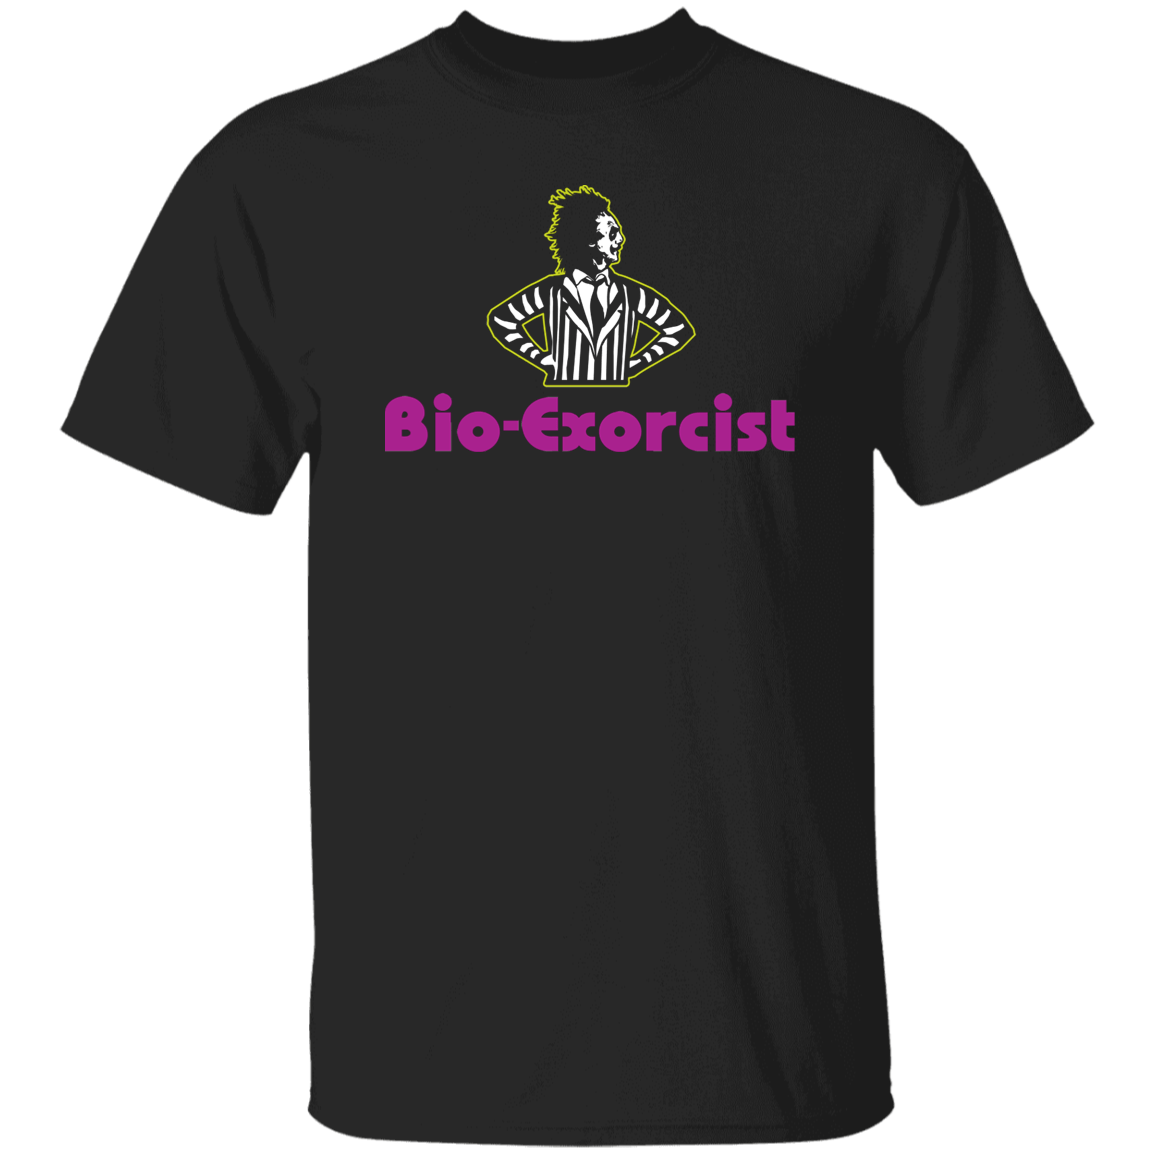 T-Shirts Black / S Bio-Exorcist T-Shirt